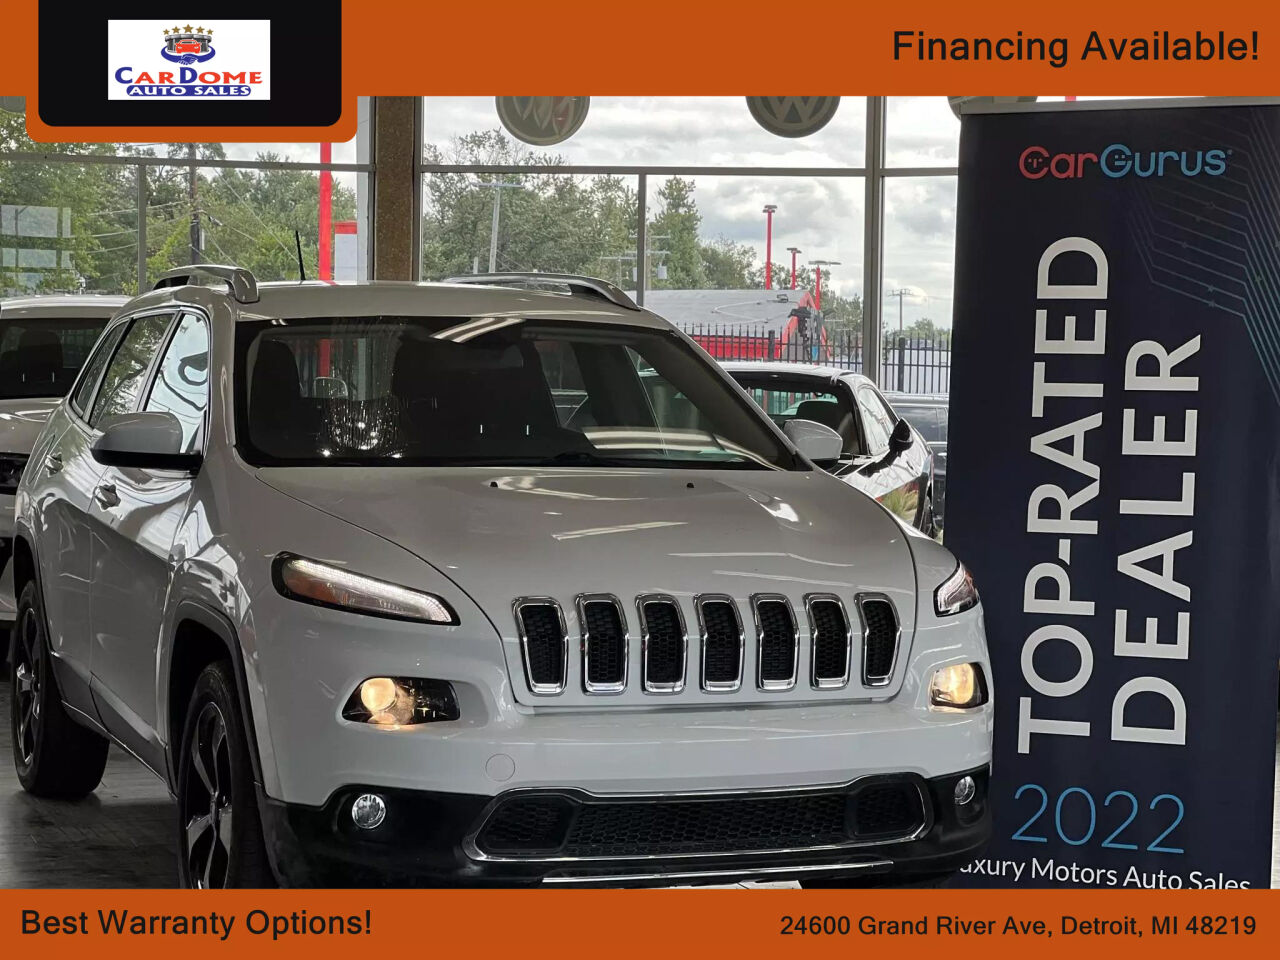 2018 Jeep Cherokee For Sale Carsforsale com 174 